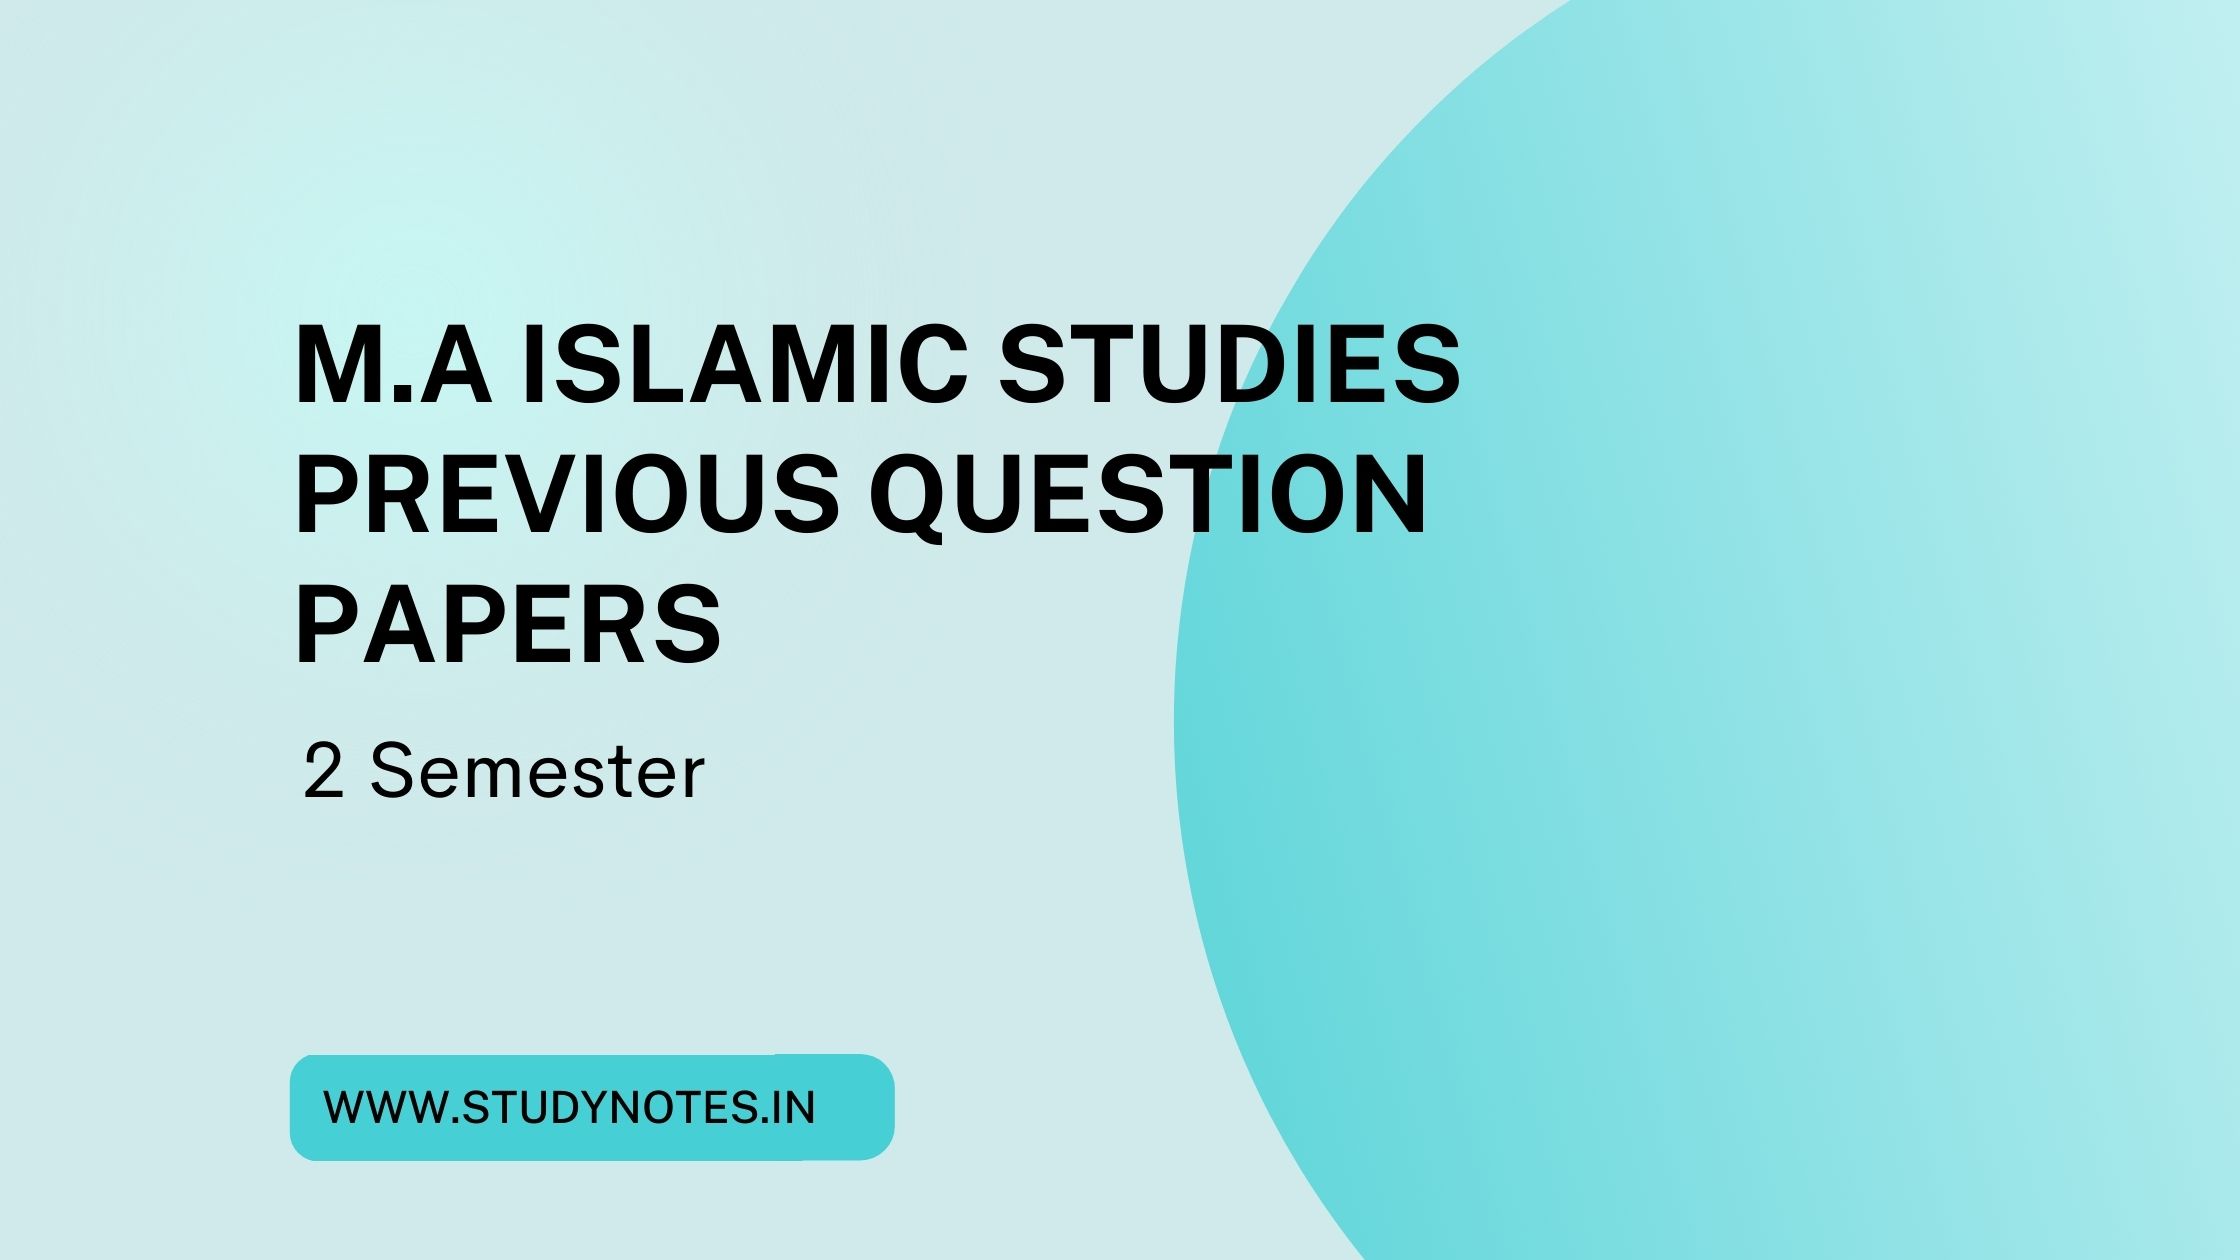 Second Semester M.A Islamic Studies Previous Question Paper Of Calicut University